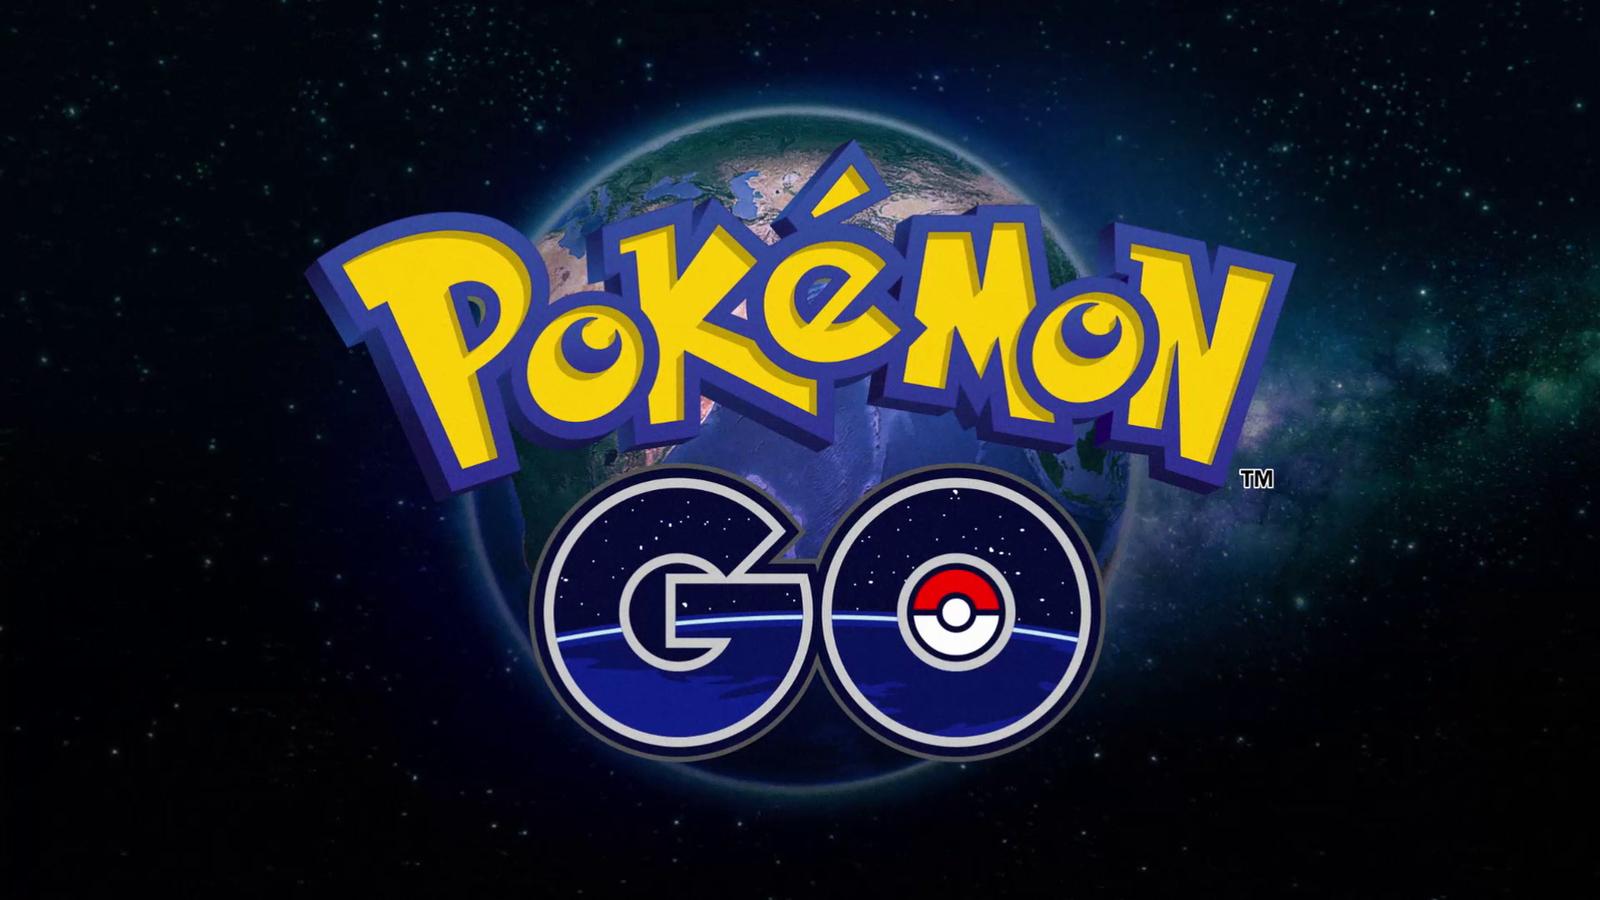 Pokémon Go's revenue bounced back after a slump, and it's all